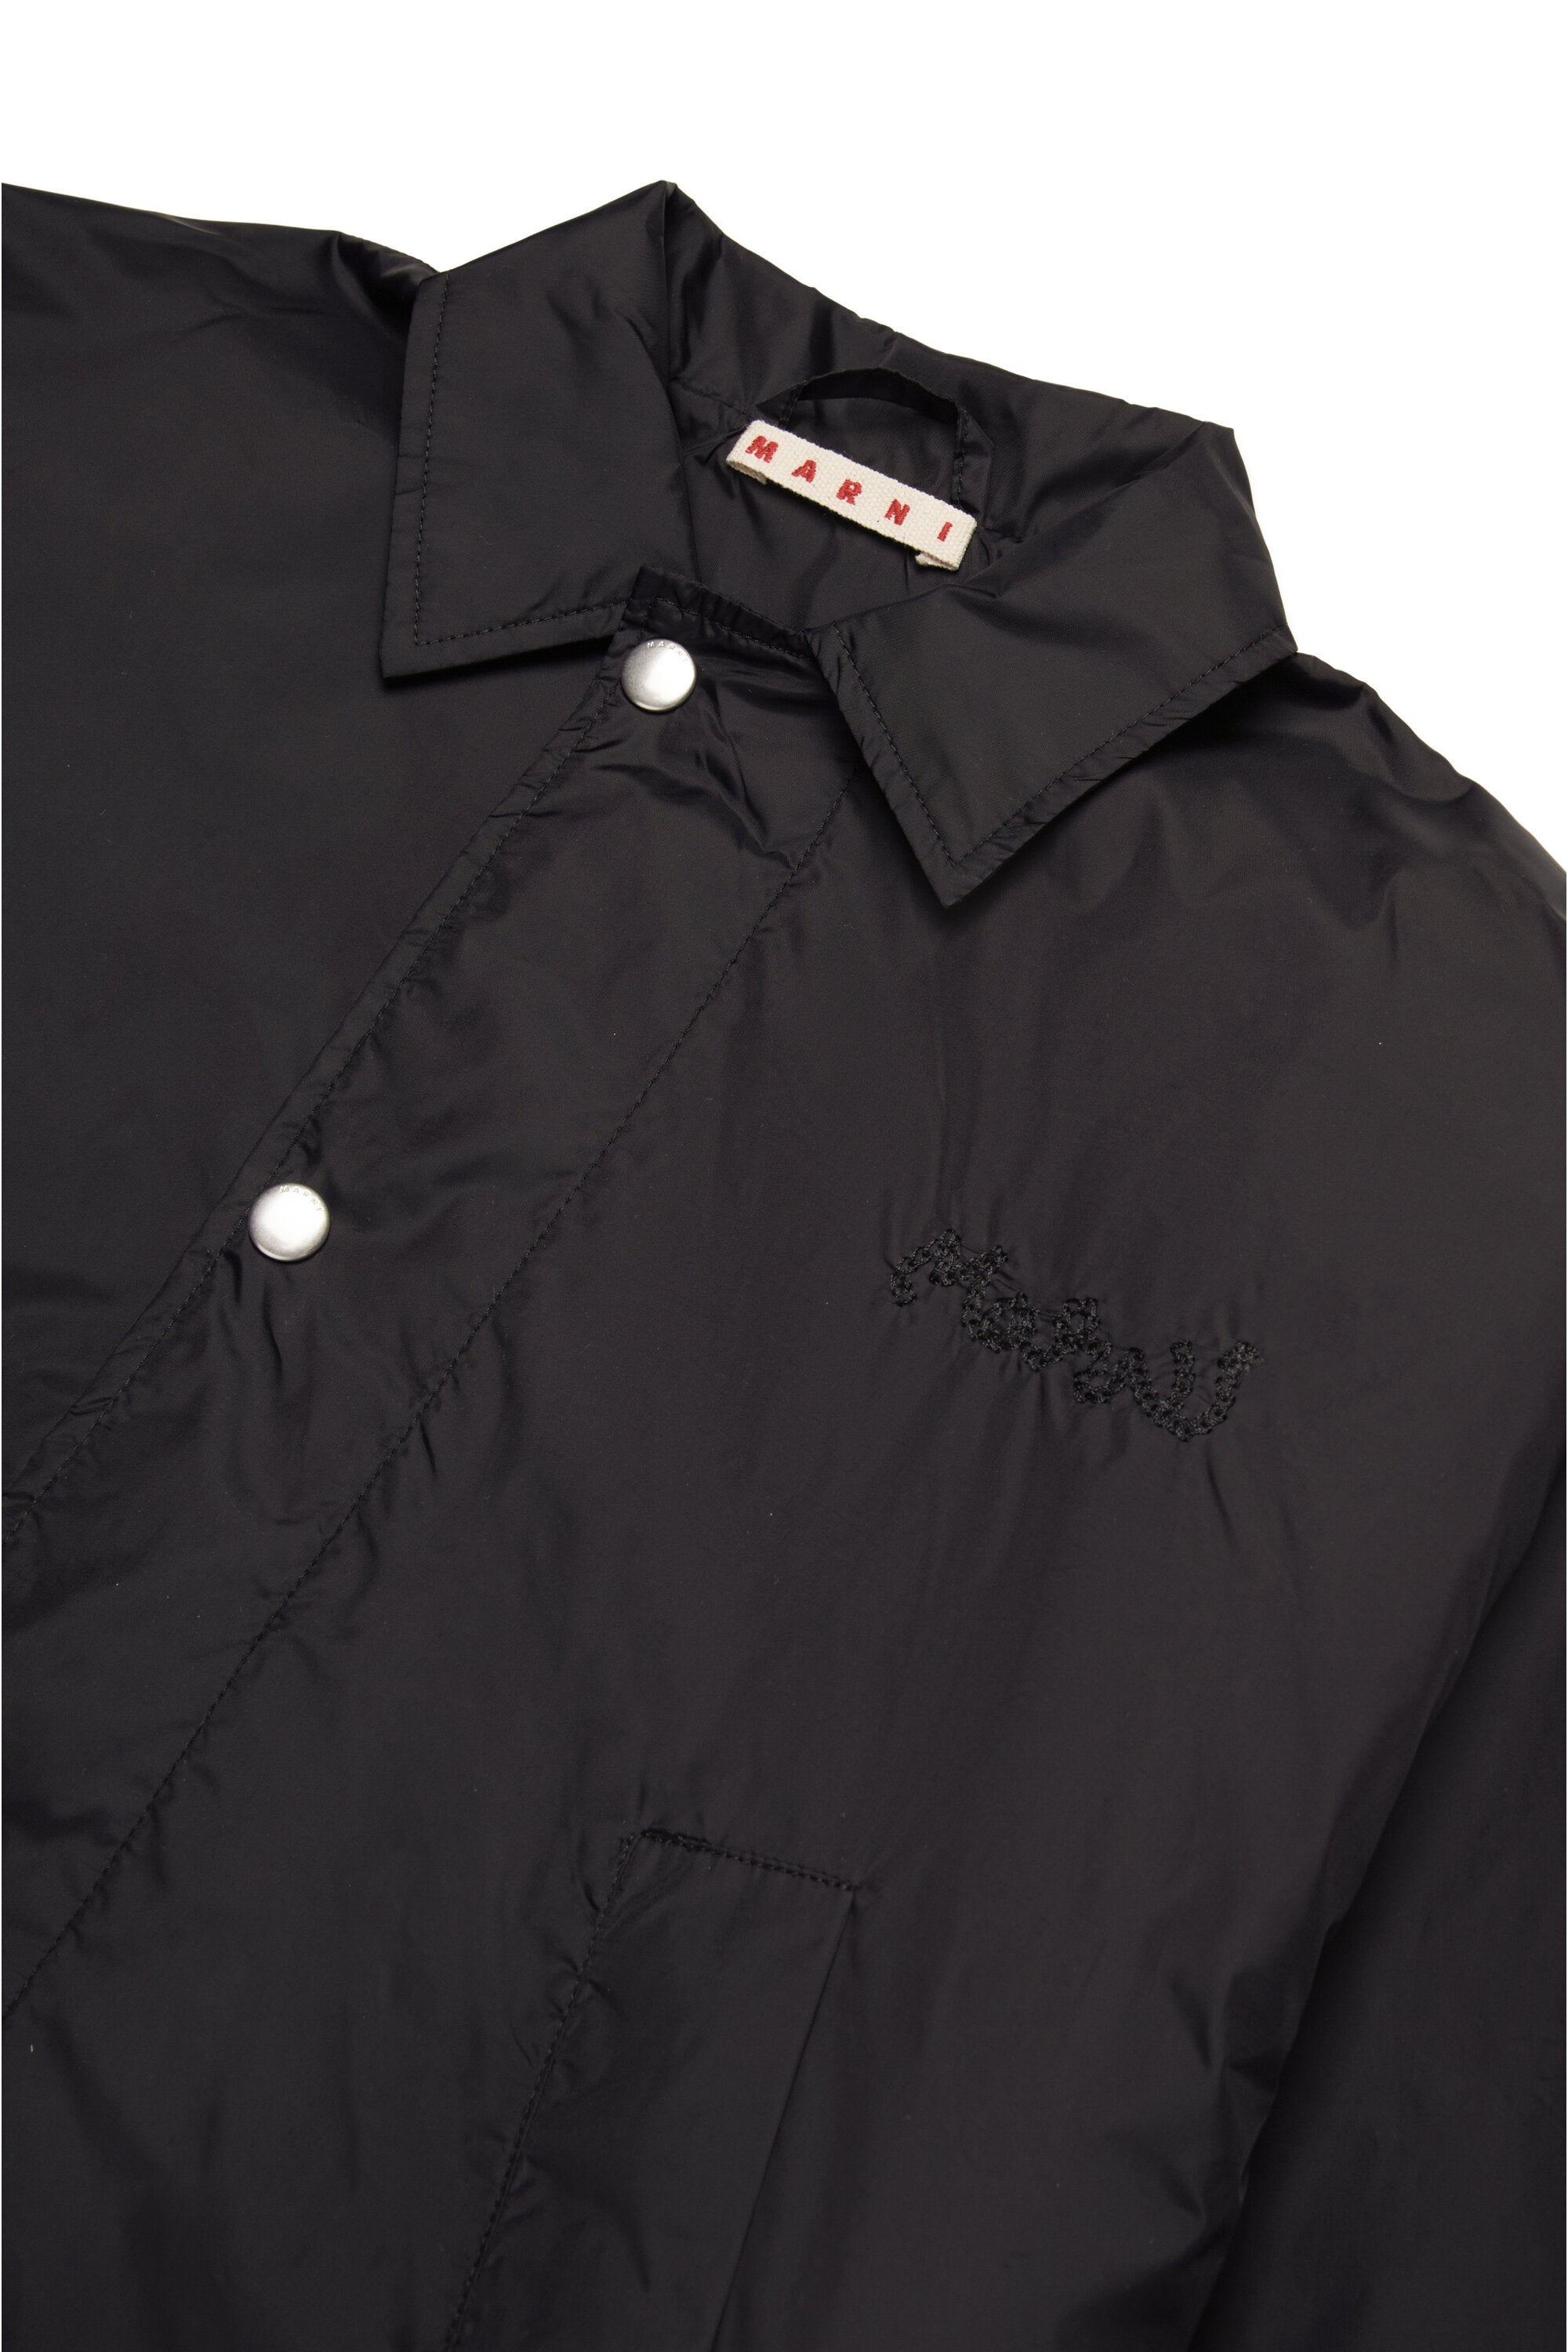 Nylon windbreaker jacket